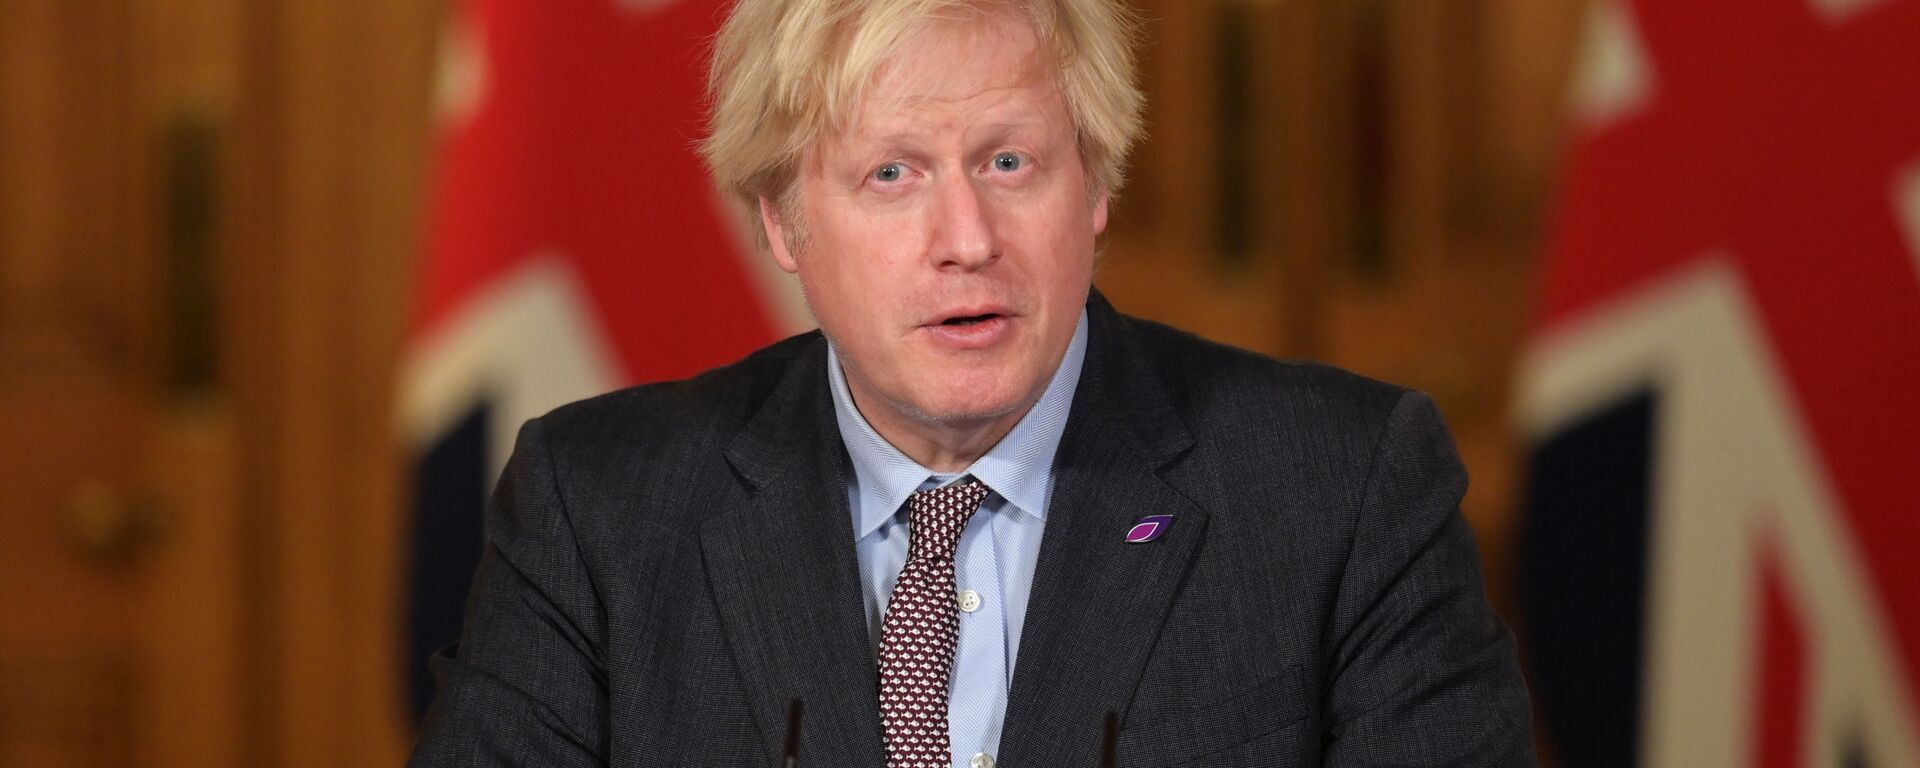 Boris Johnson, primer ministro del Reino Unido  - Sputnik Mundo, 1920, 10.03.2021